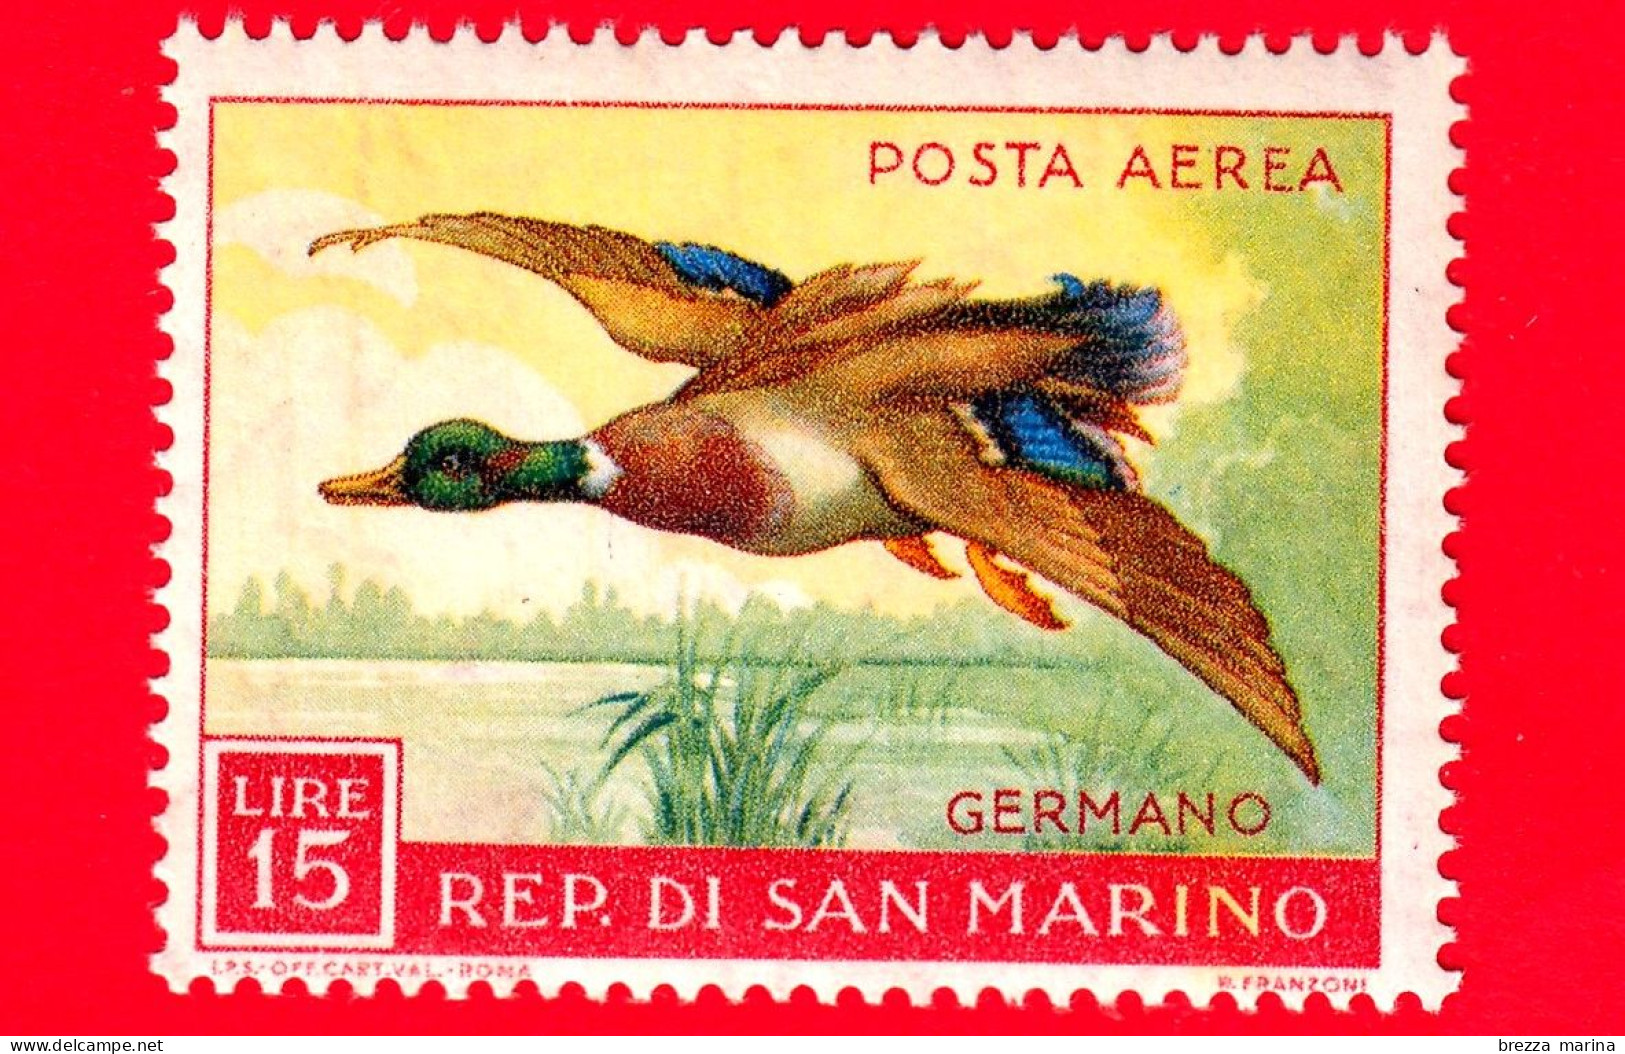 Nuovo - MNH - SAN MARINO - 1959 - Fauna Avicola - 1ª Emissione - Uccelli - Birds - POSTA AEREA - Germano - 15 - Posta Aerea